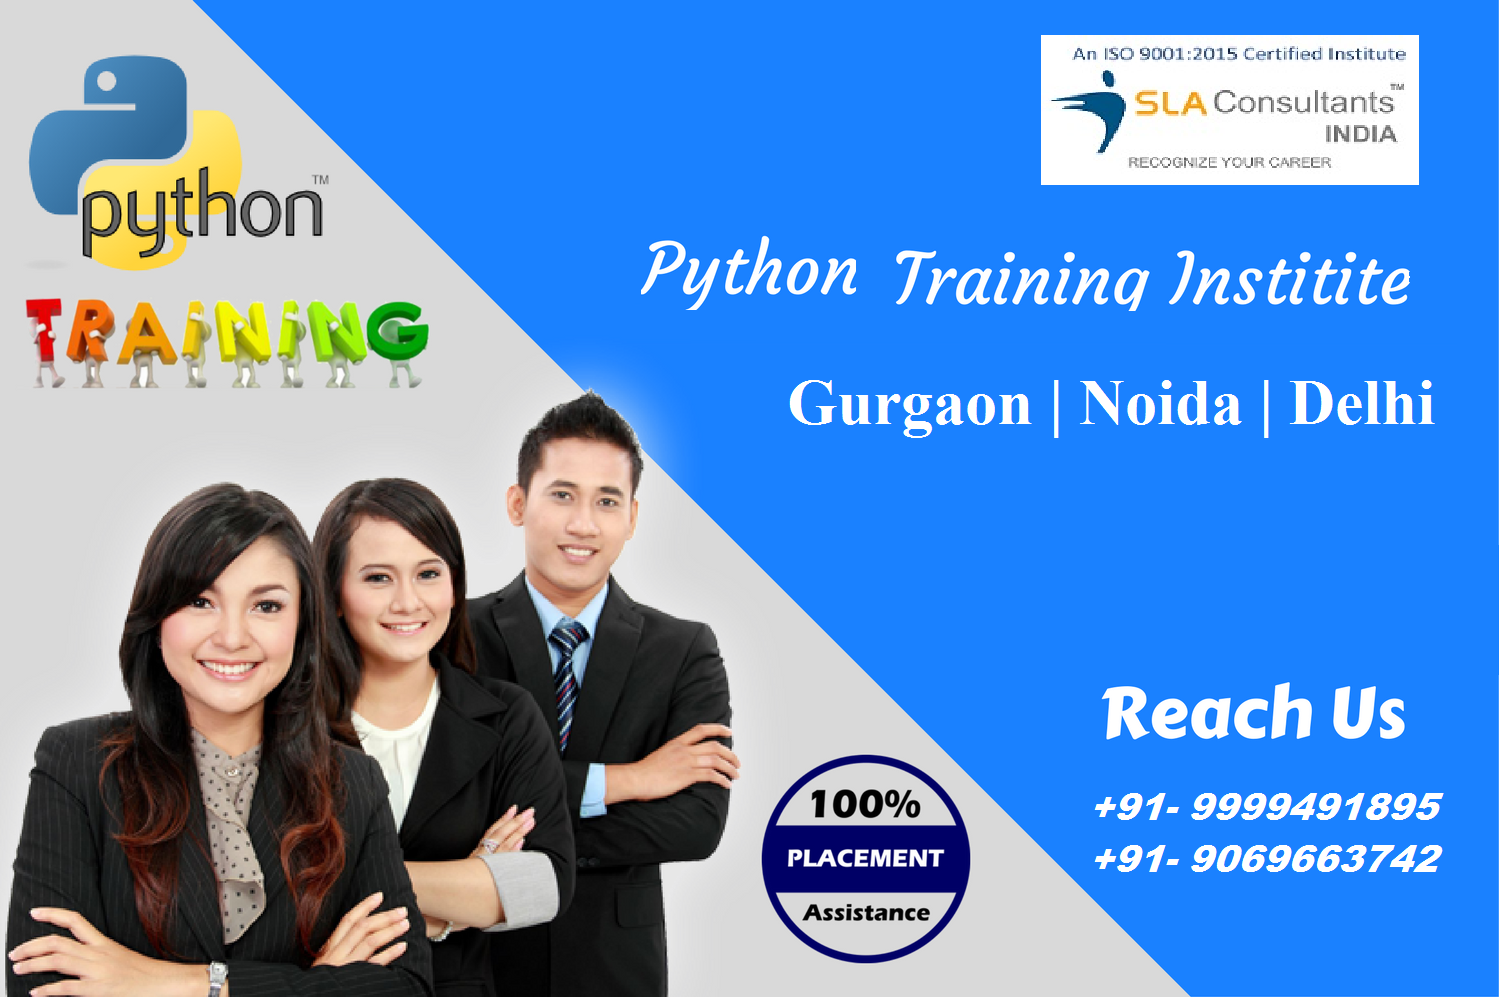 Python Training InstituteEducation and LearningProfessional CoursesEast DelhiLaxmi Nagar